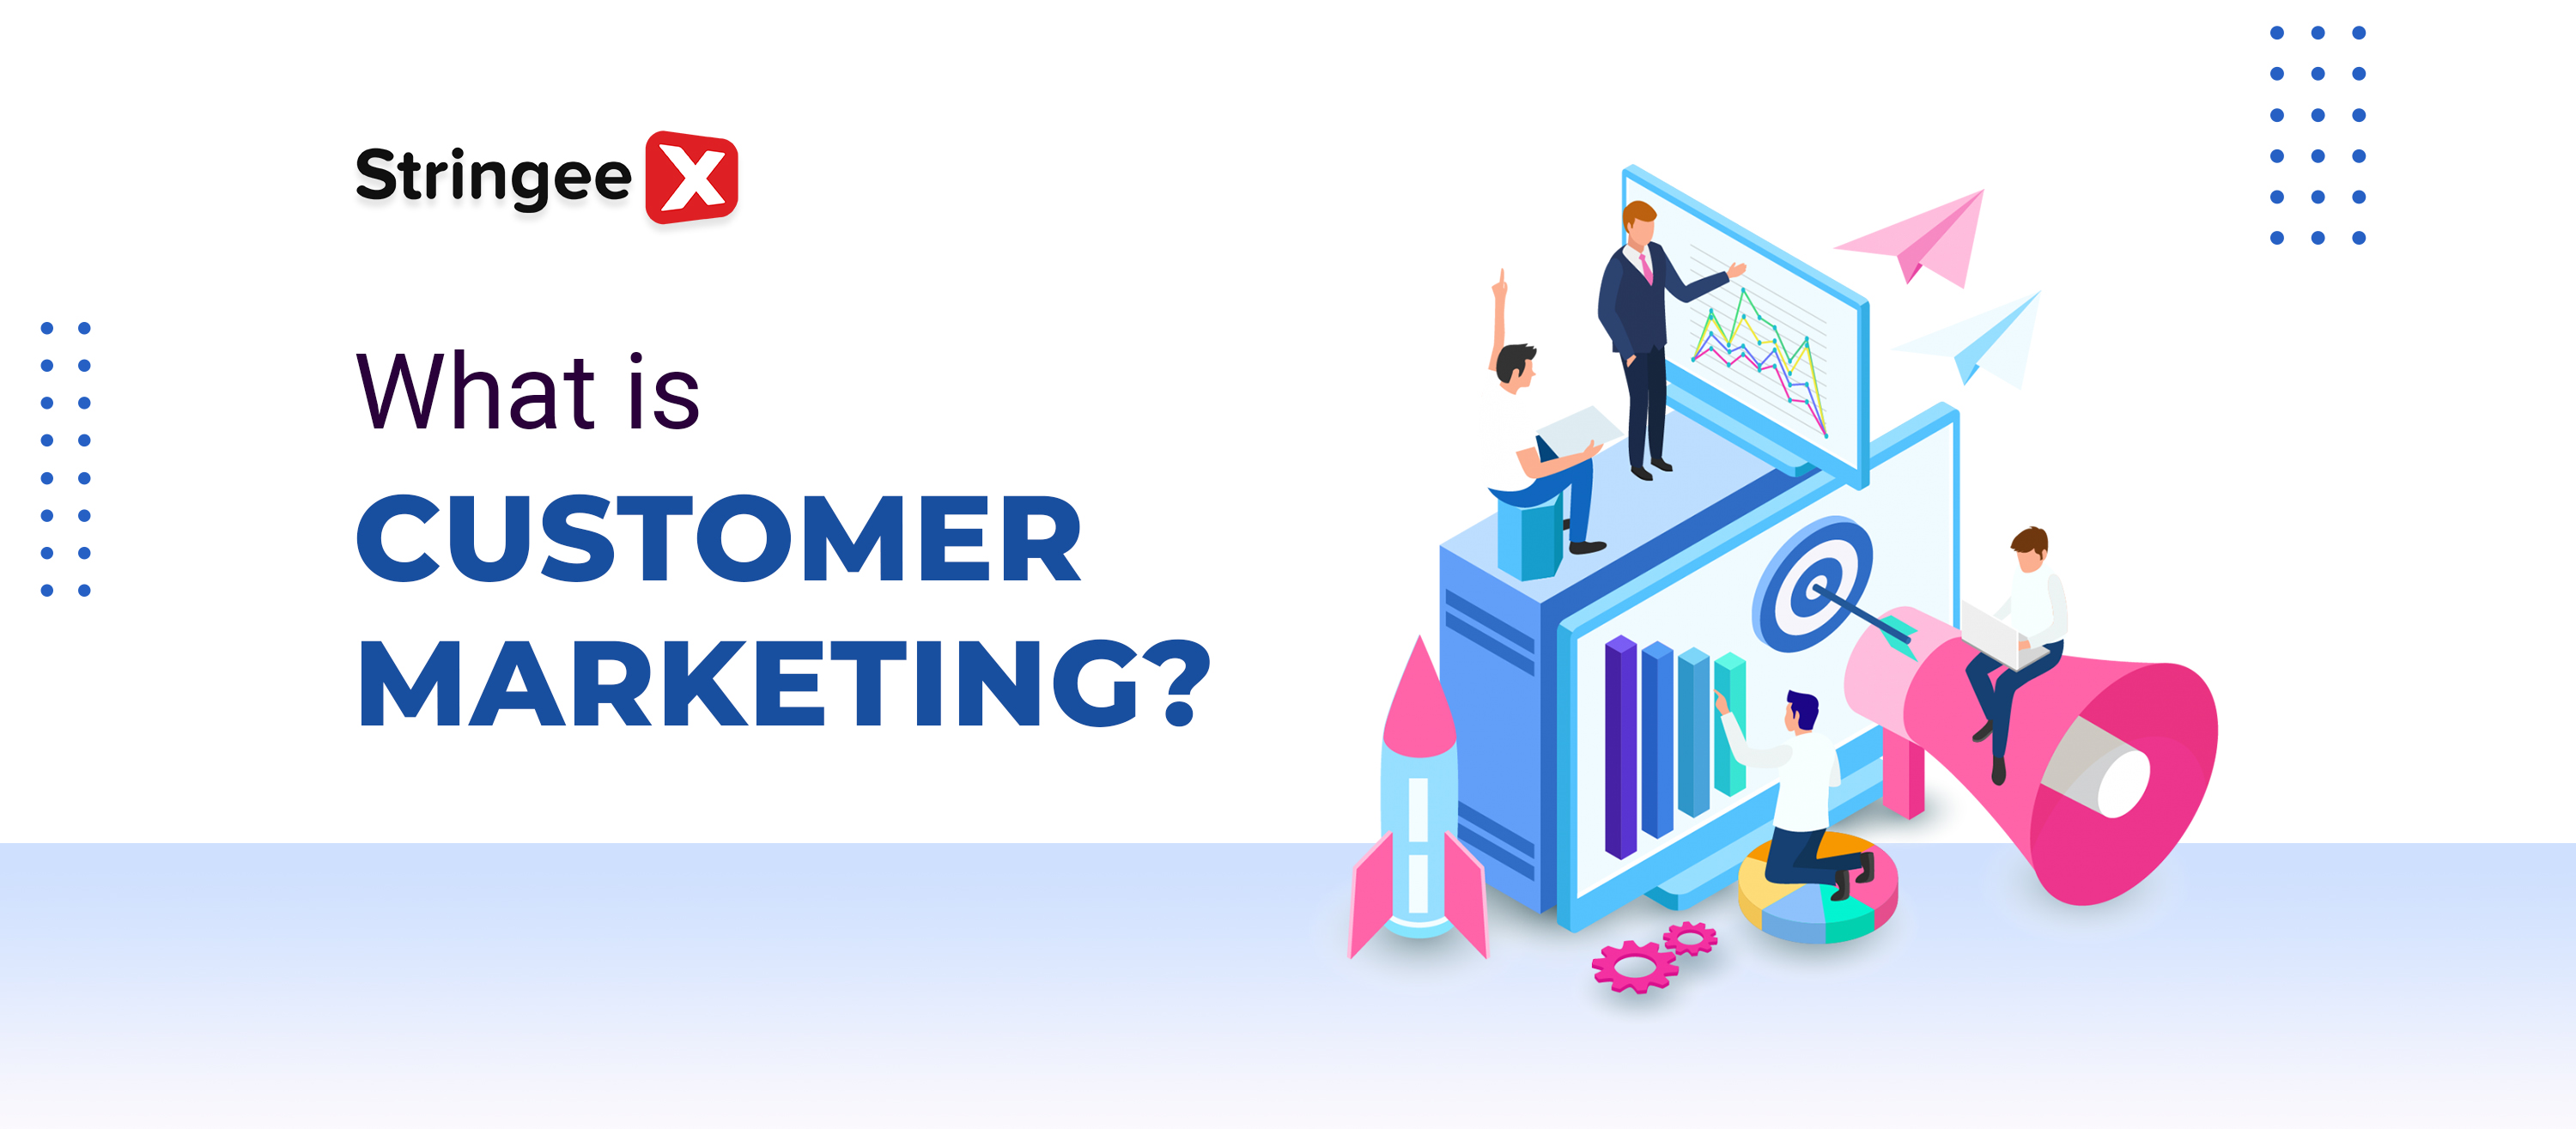 What is Customer Marketing? Effective Customer Marketing strategies